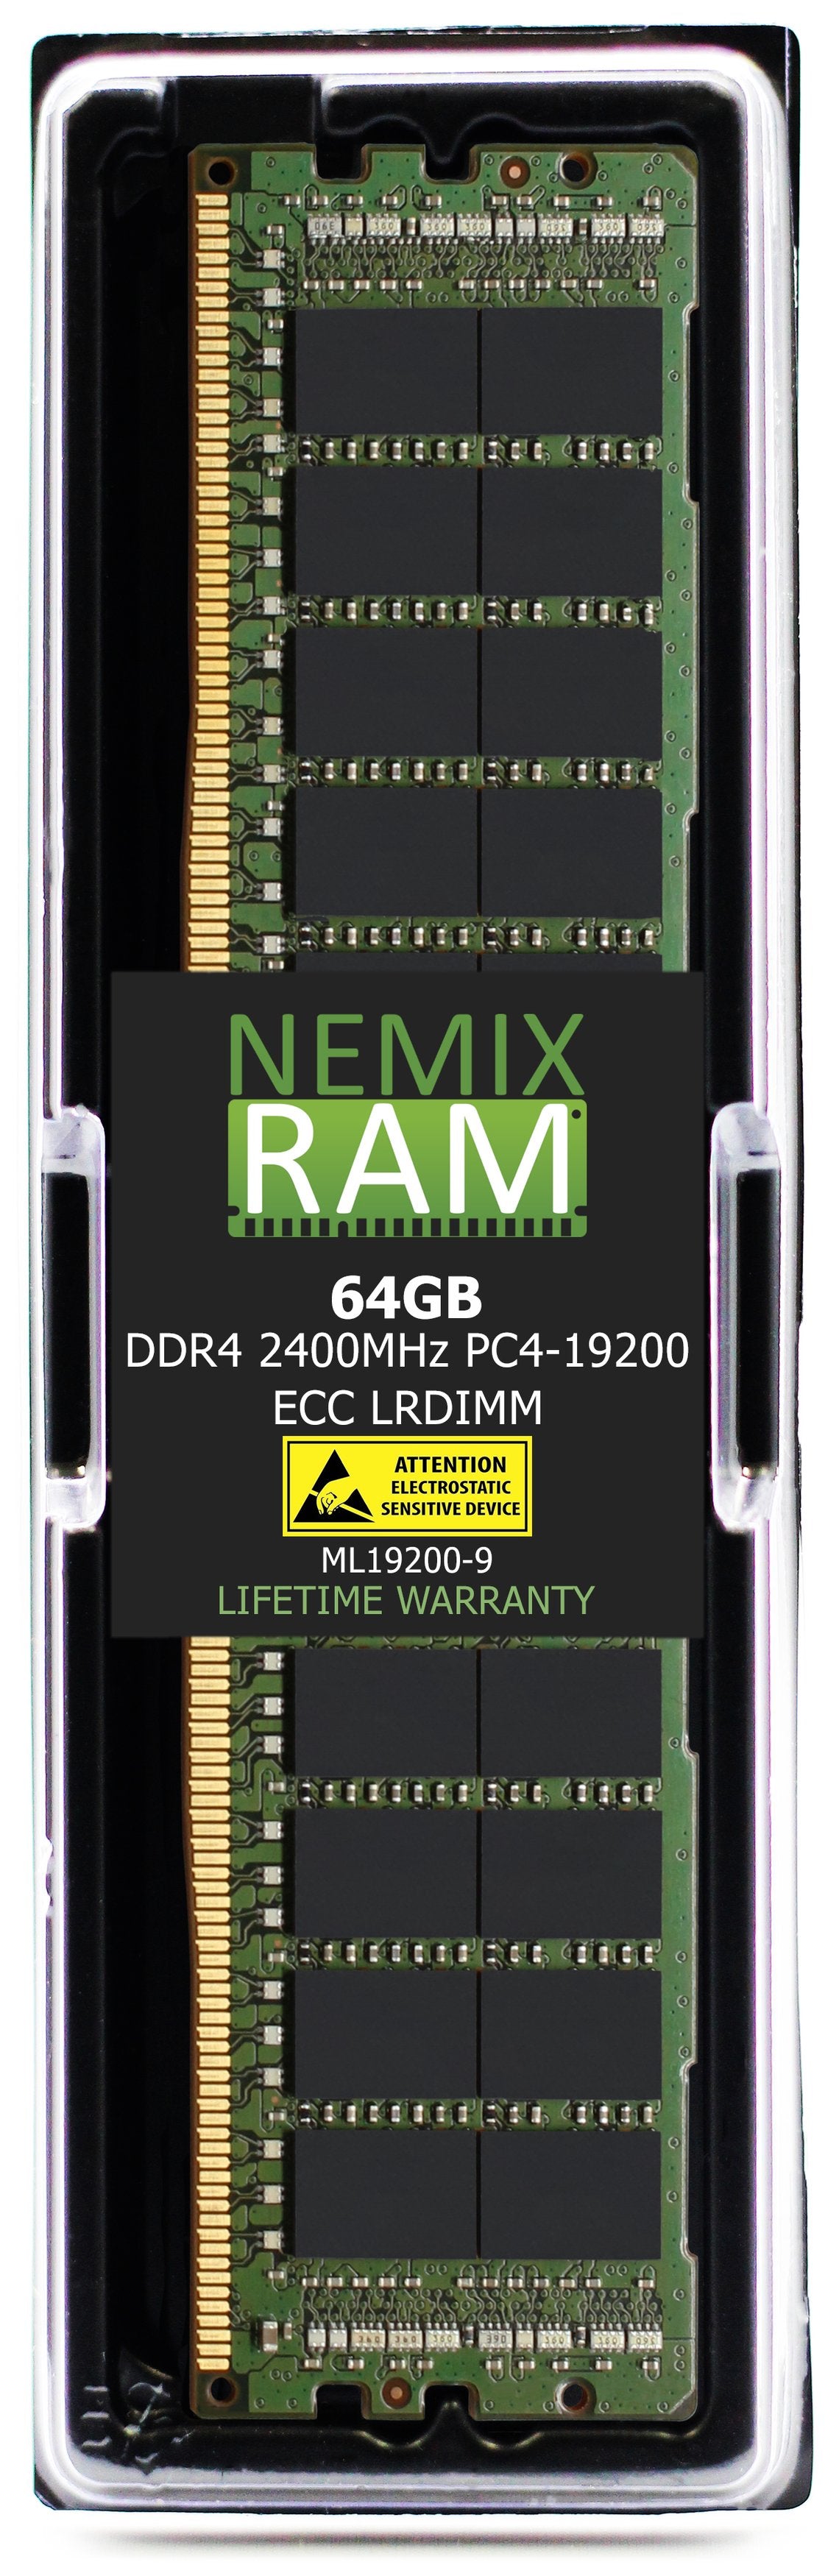 Hynix HMAA8GL7AMR4N-UH 64GB DDR4 2400MHZ PC4-19200 LRDIMM Compatible Memory Module